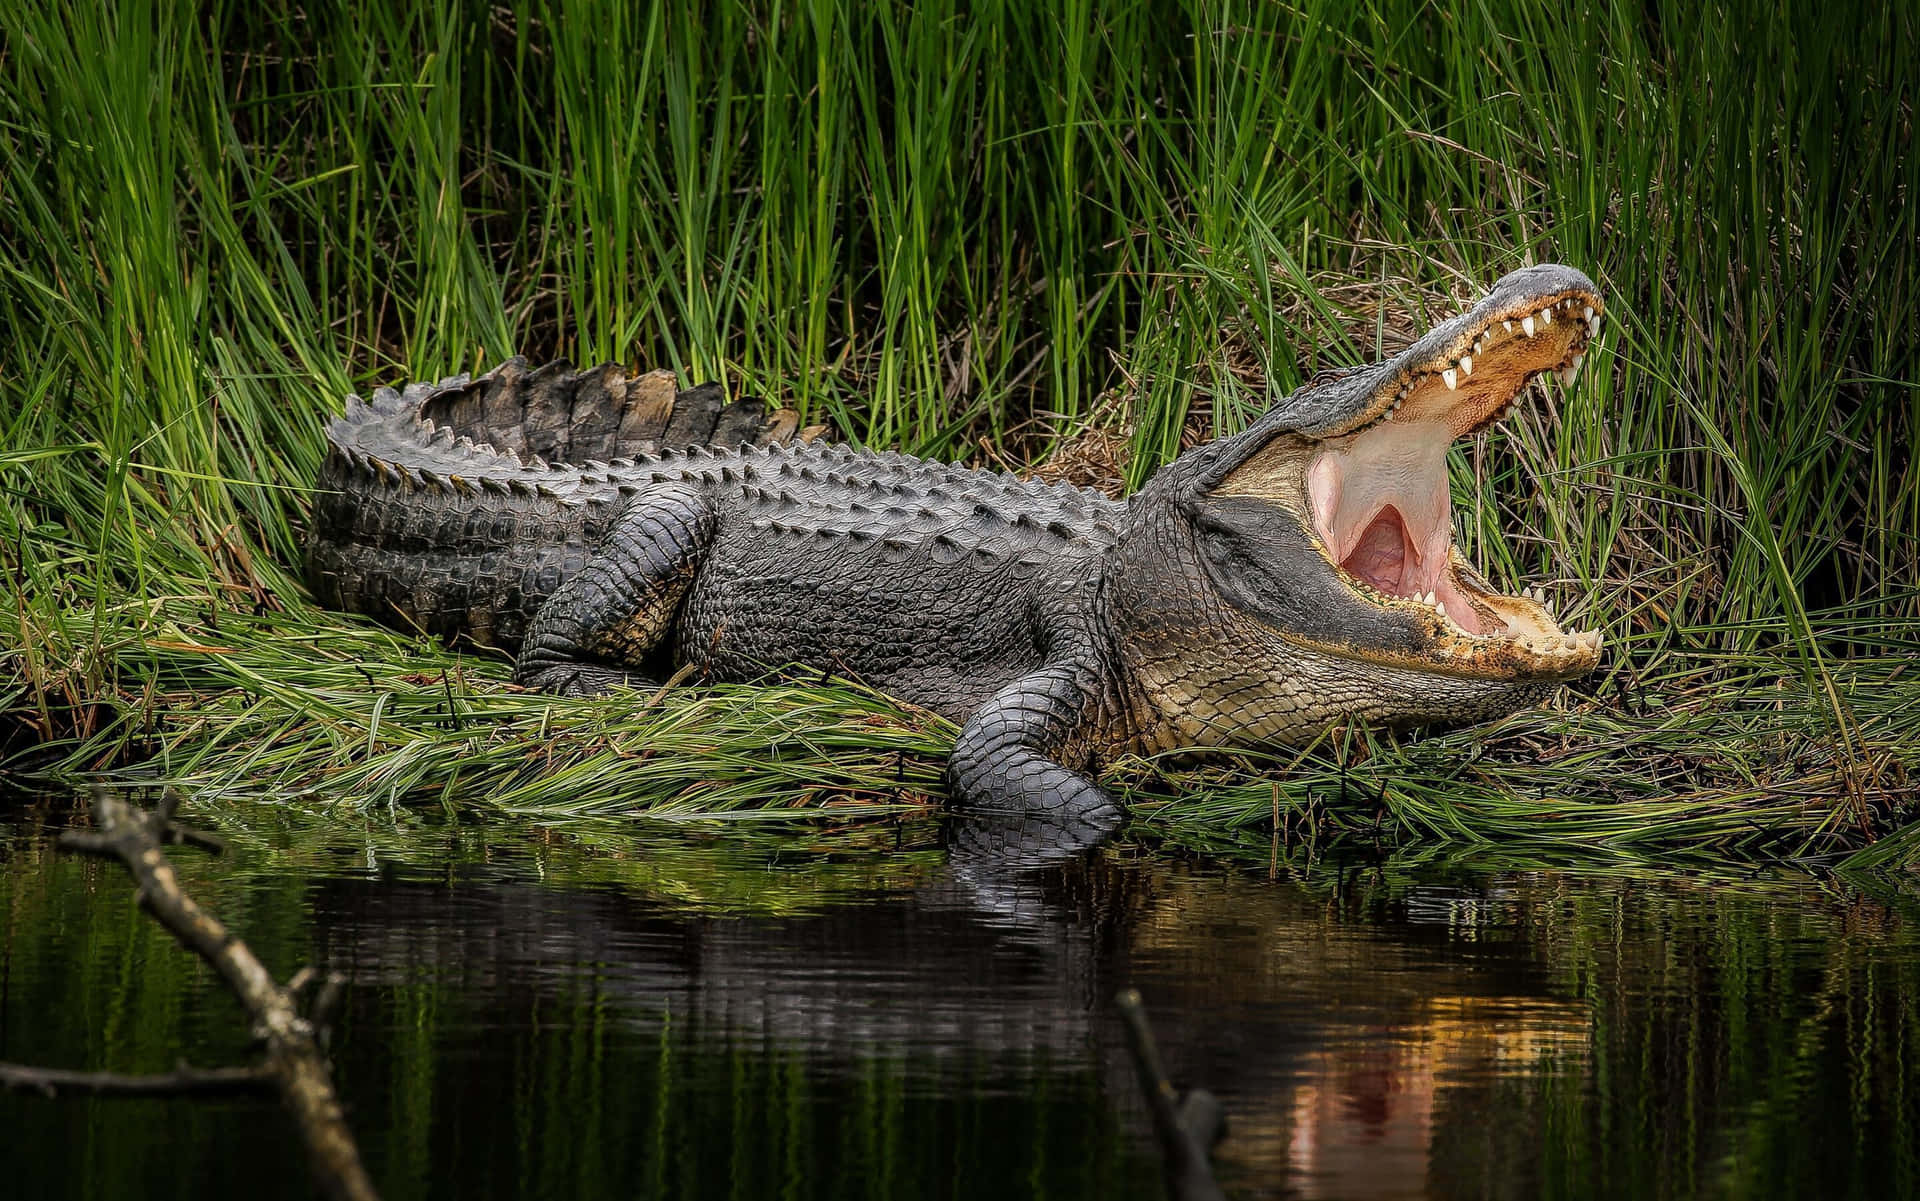 An alligator sunbathing in tropical weather